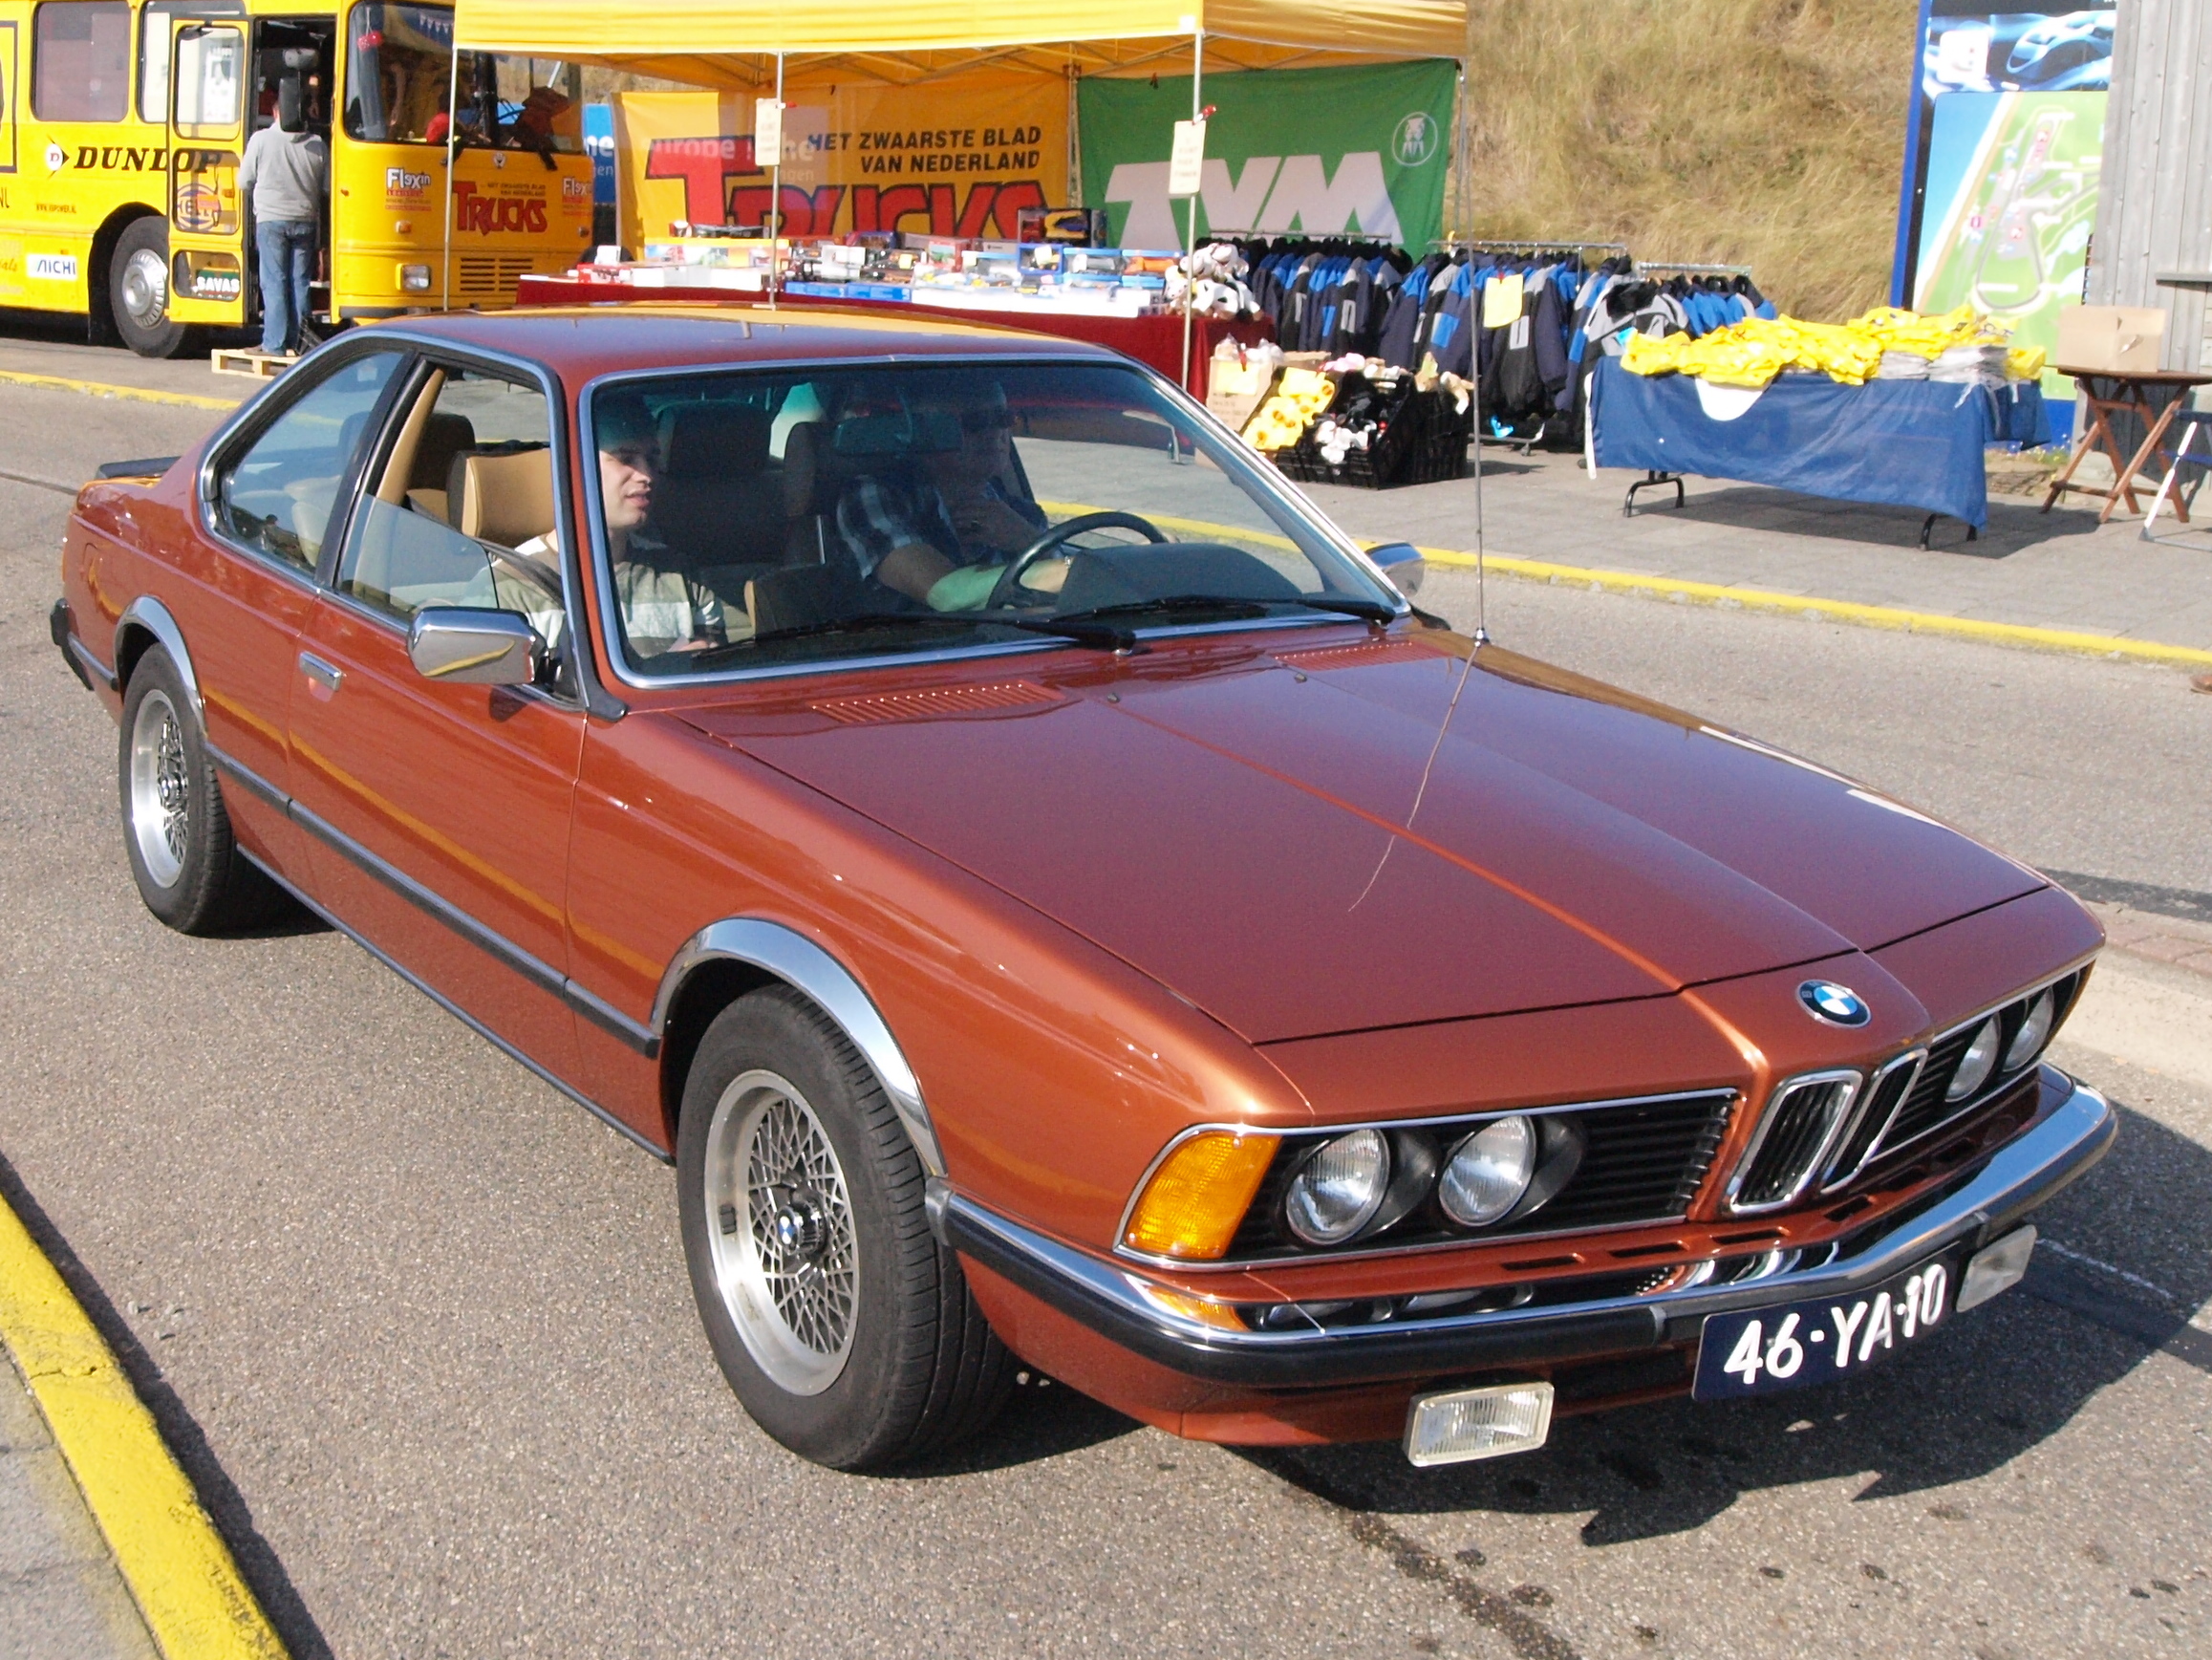 File:BMW 630 CS AUTOMATIC dutch licence registration 46-YA-10 pic1.